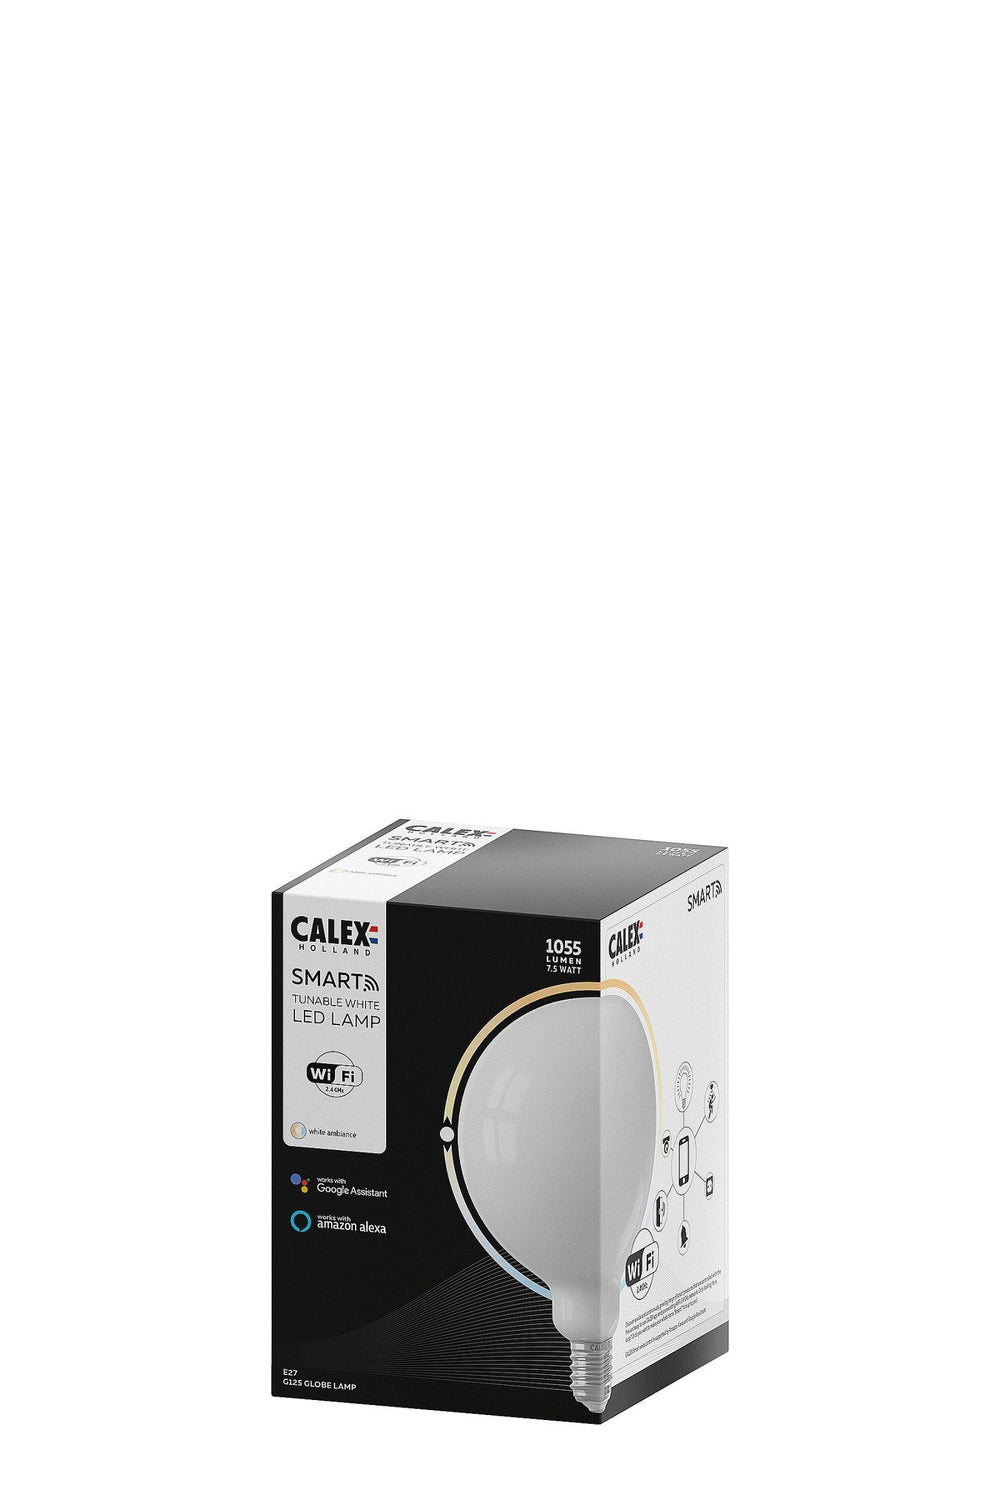 Calex 429082 | LED Softline Globe Bulb | E27 | G125 | 7.5W | Smart Bulb